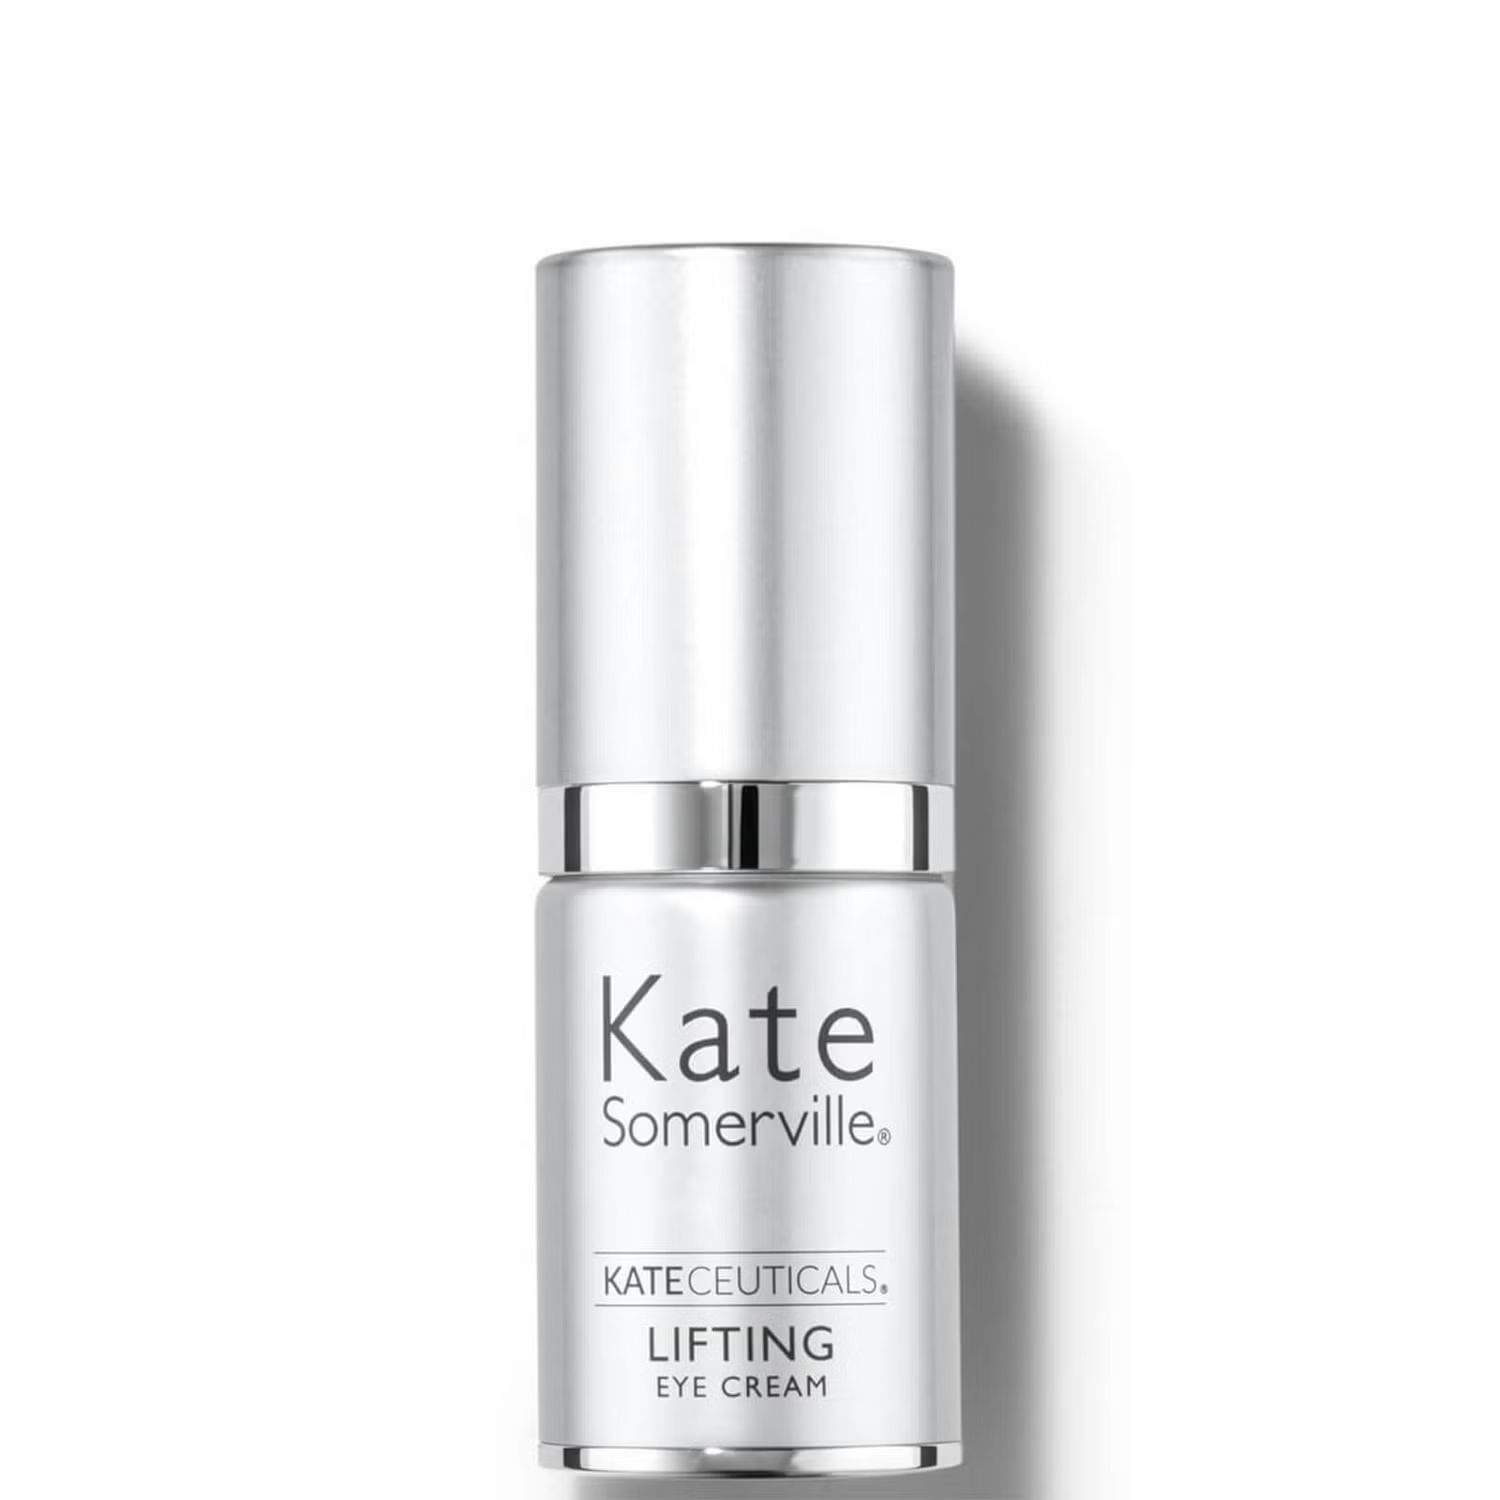 Kate Somerville KateCeuticals Lifting Eye Cream 15ml | Cult Beauty